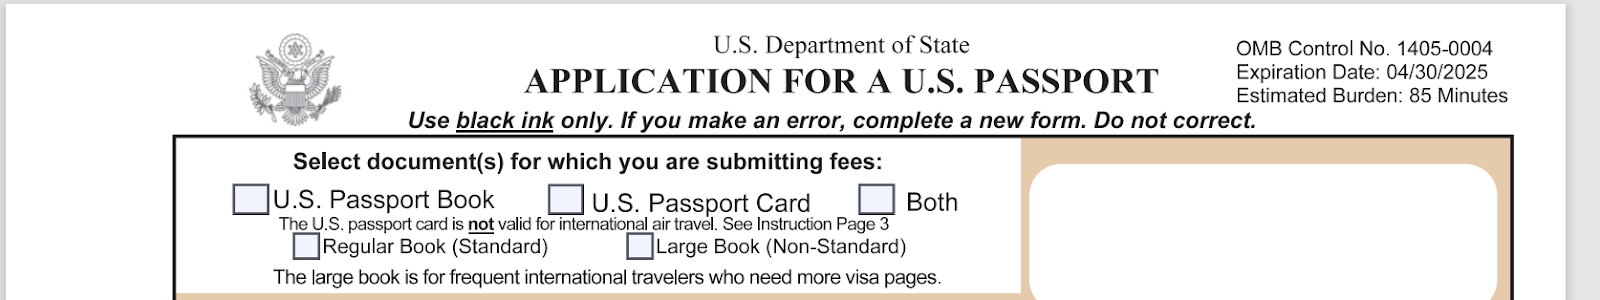 US passport application